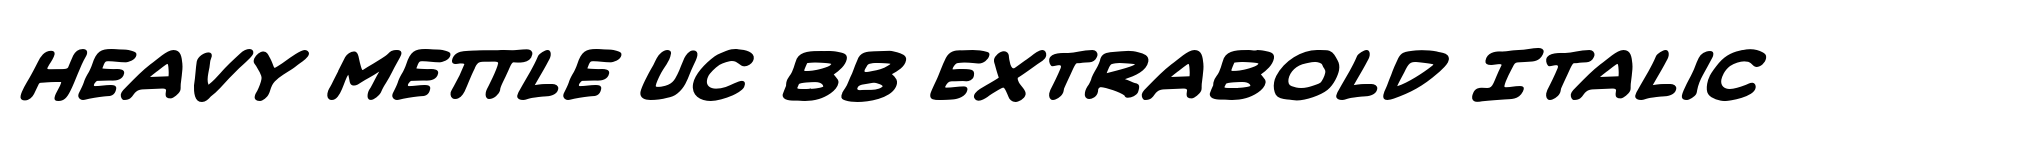 Heavy Mettle UC BB ExtraBold Italic image